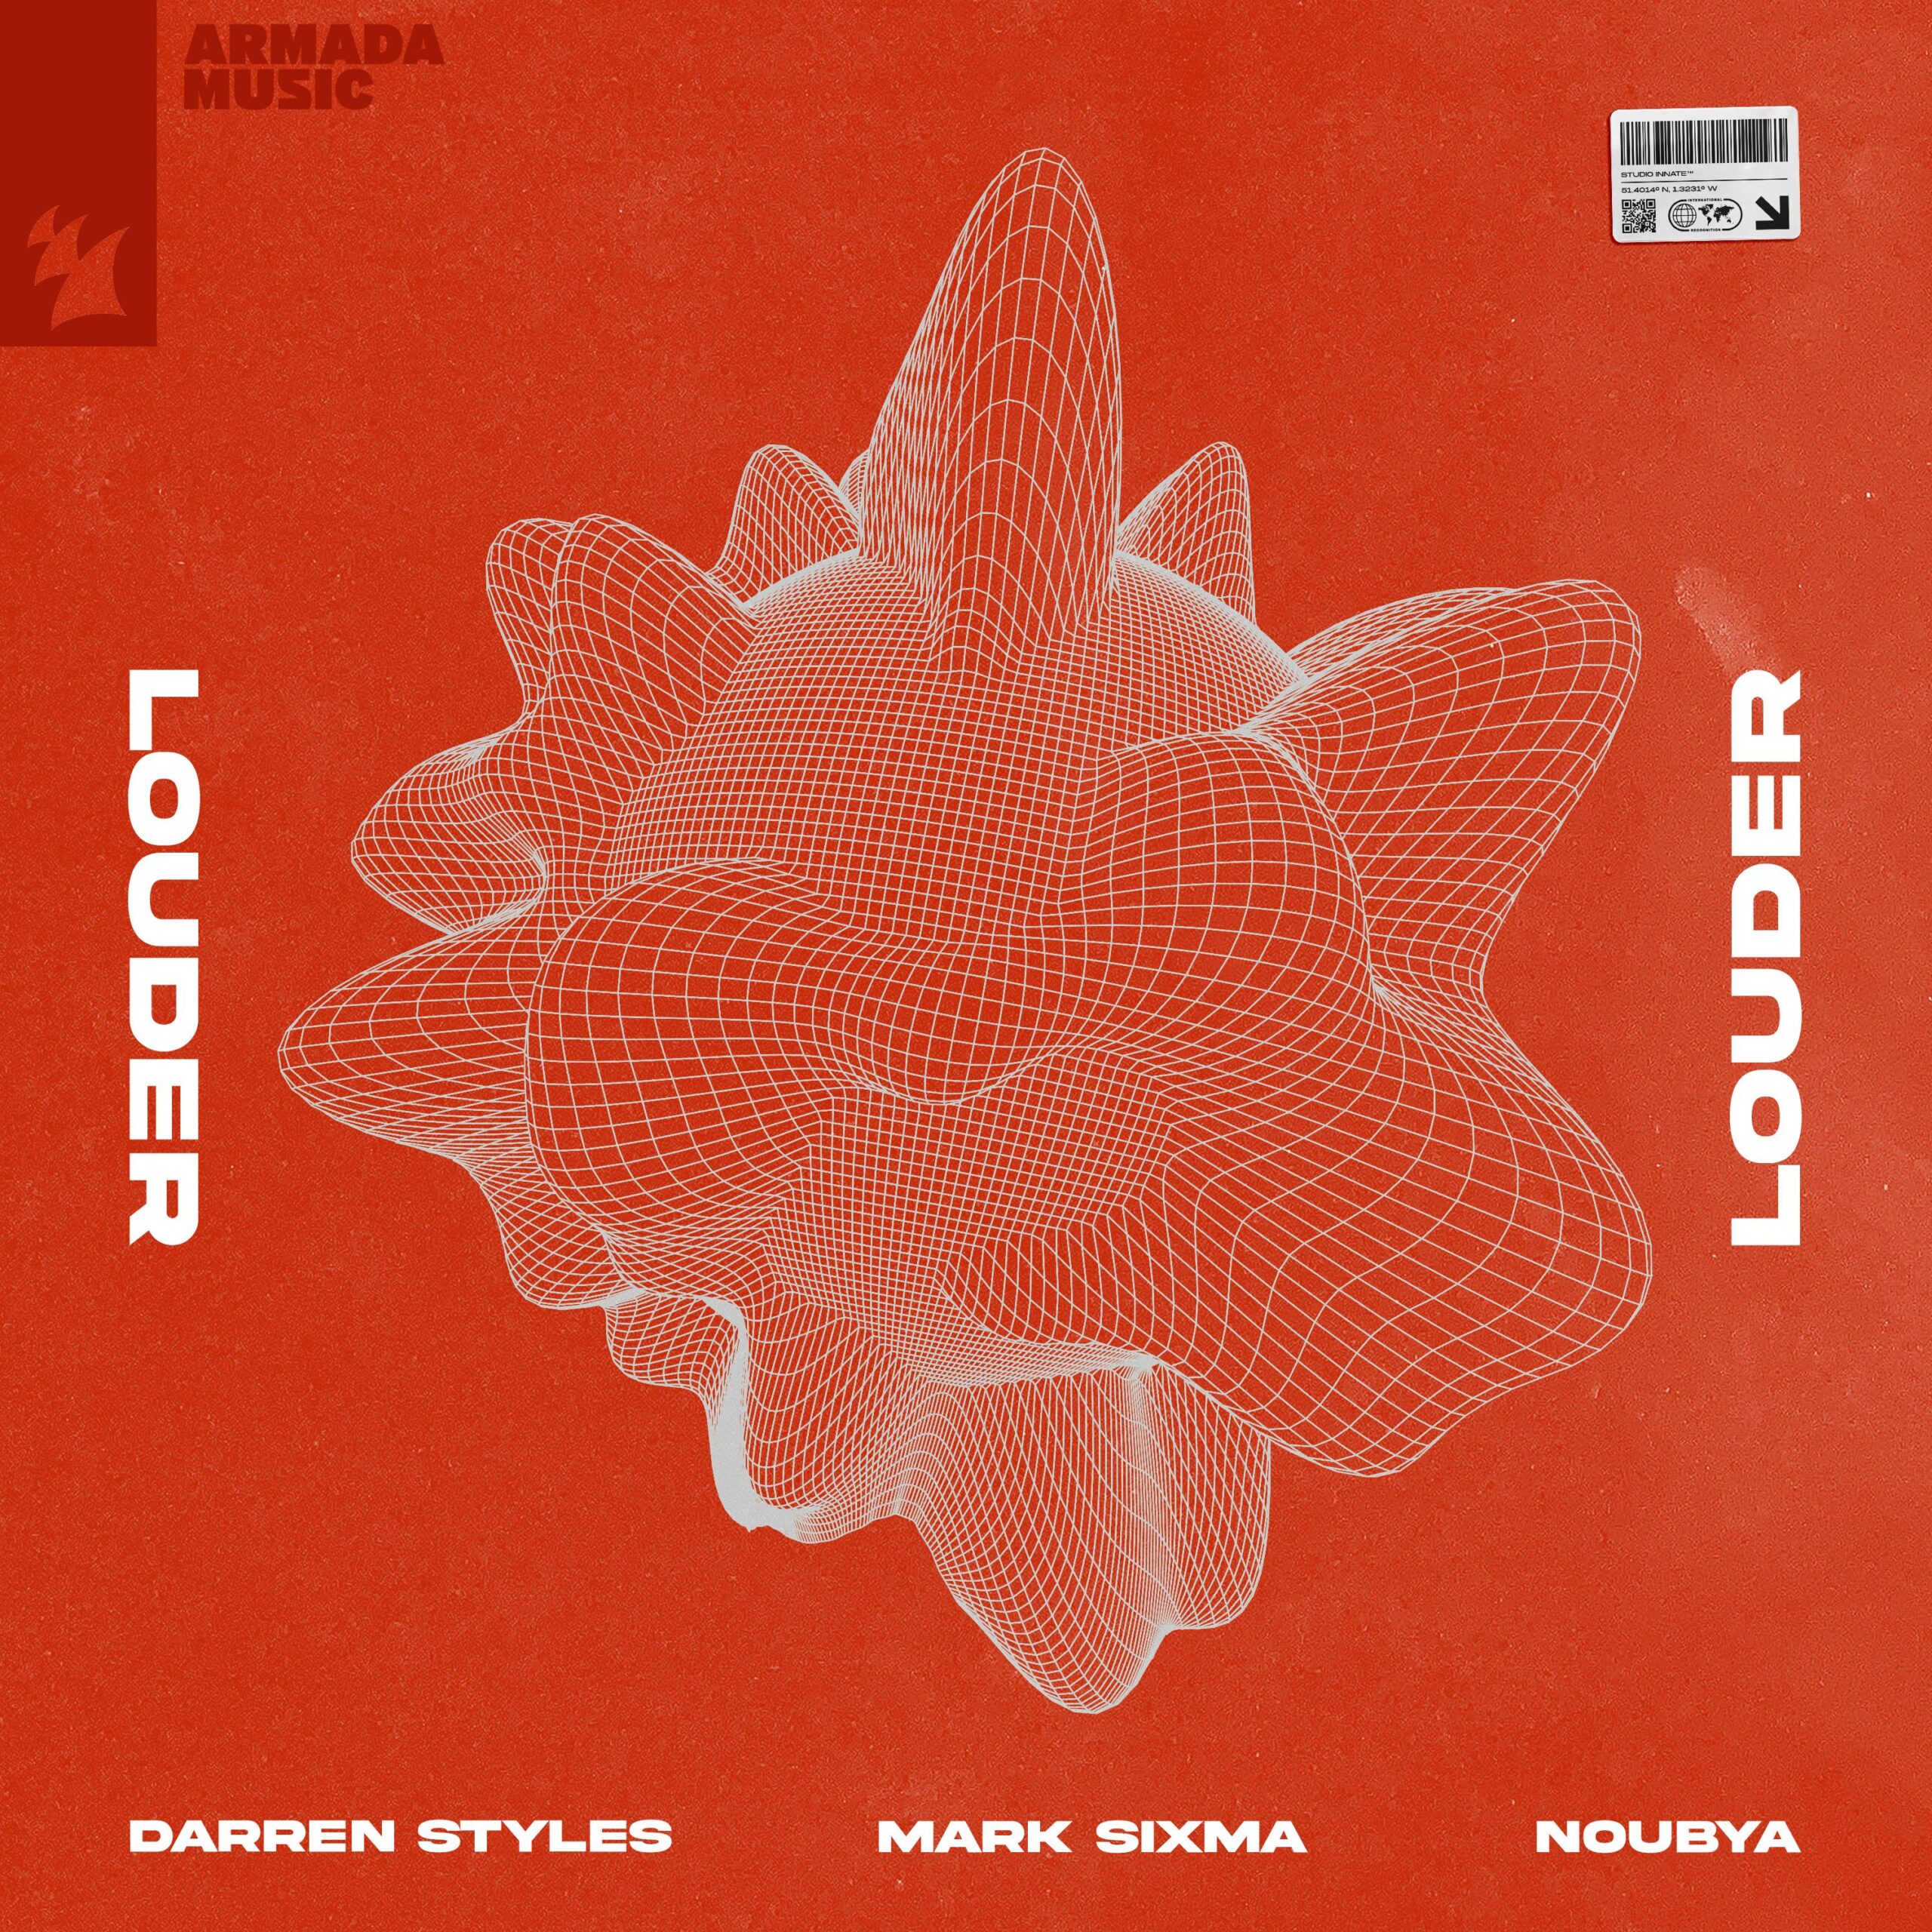 Darren Styles and Mark Sixma feat. Noubya presents Louder on Armada Music